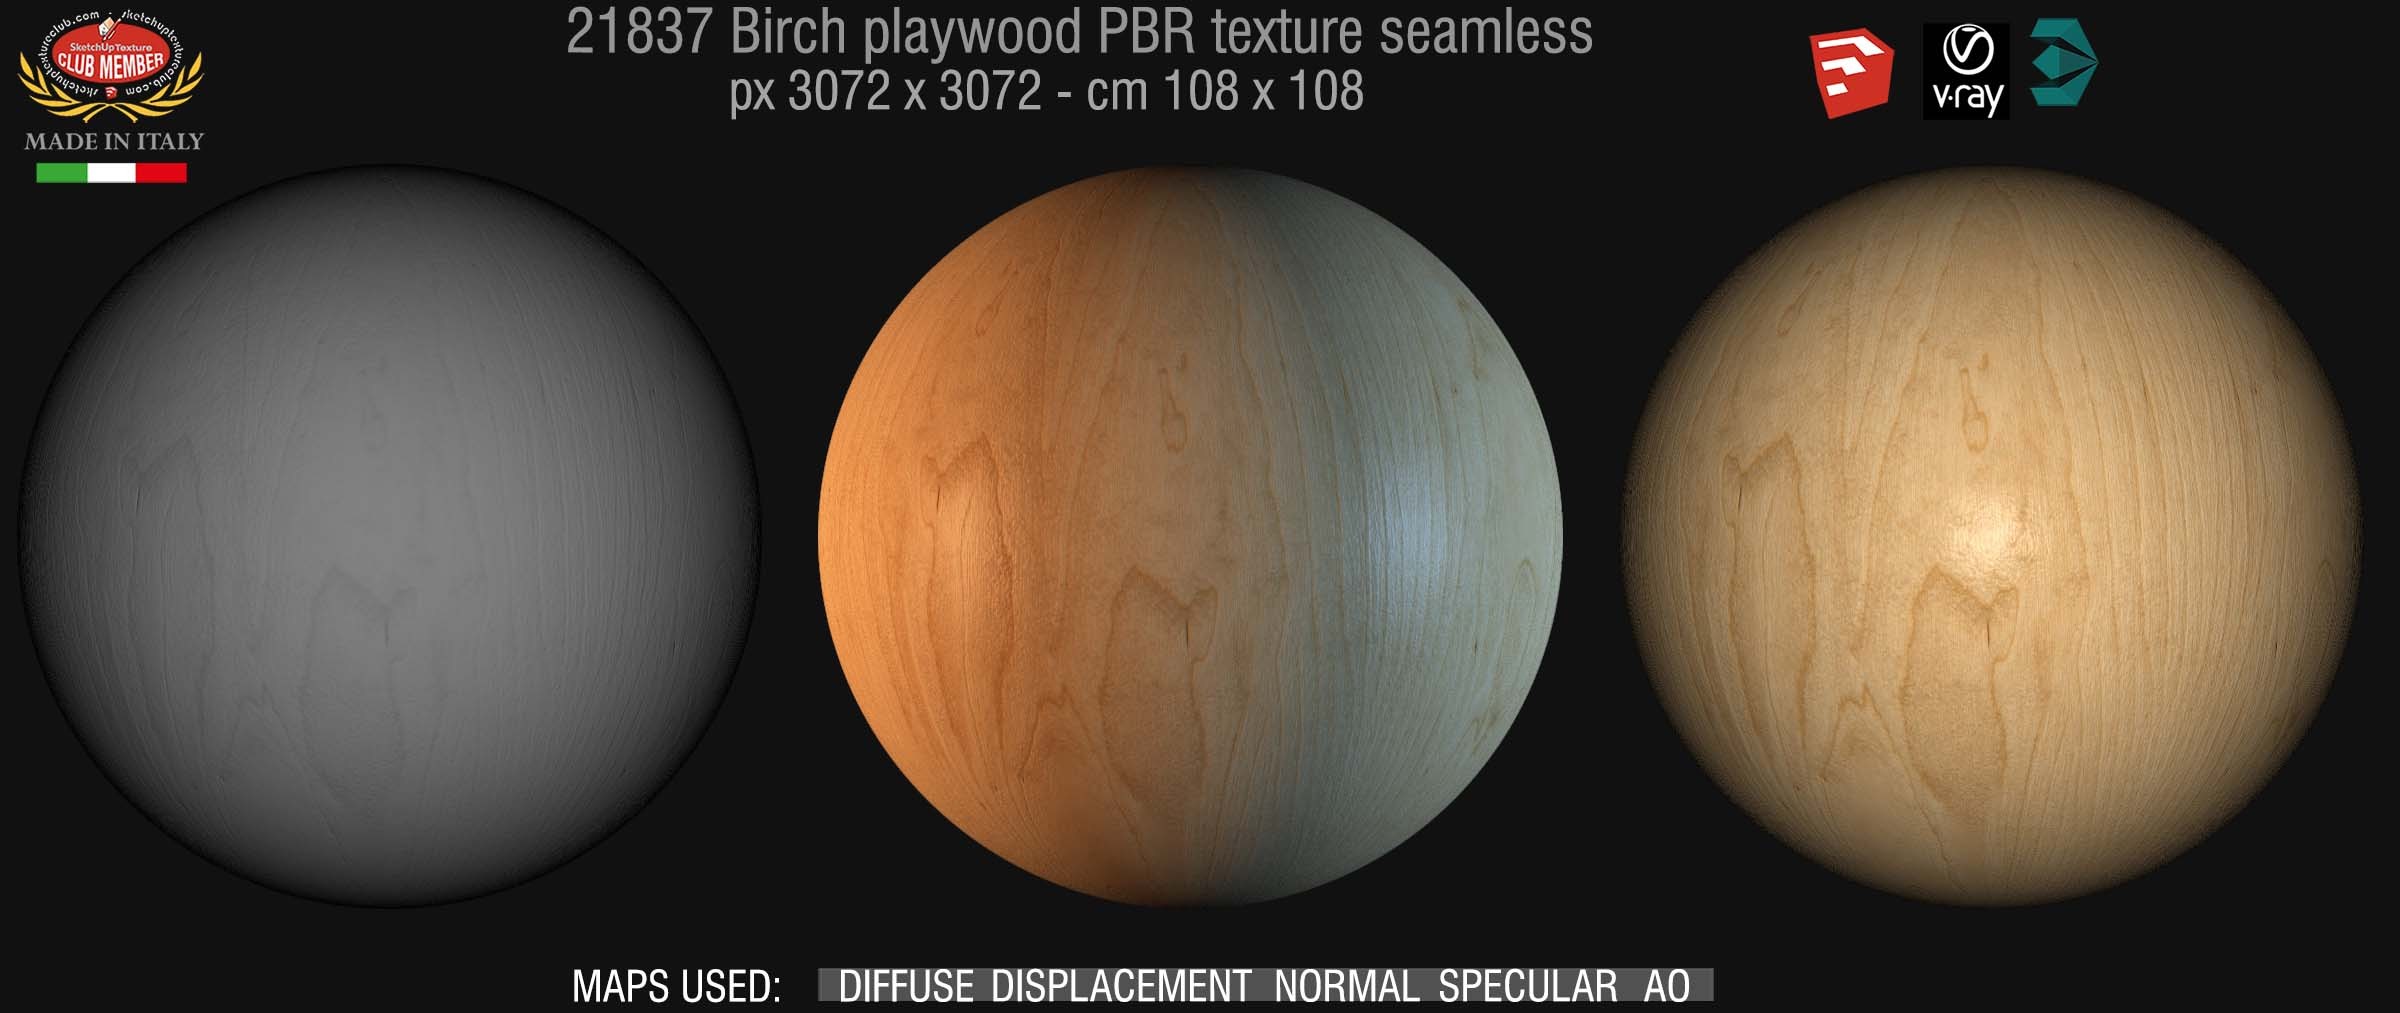 Birch playwood PBR texture seamless demo